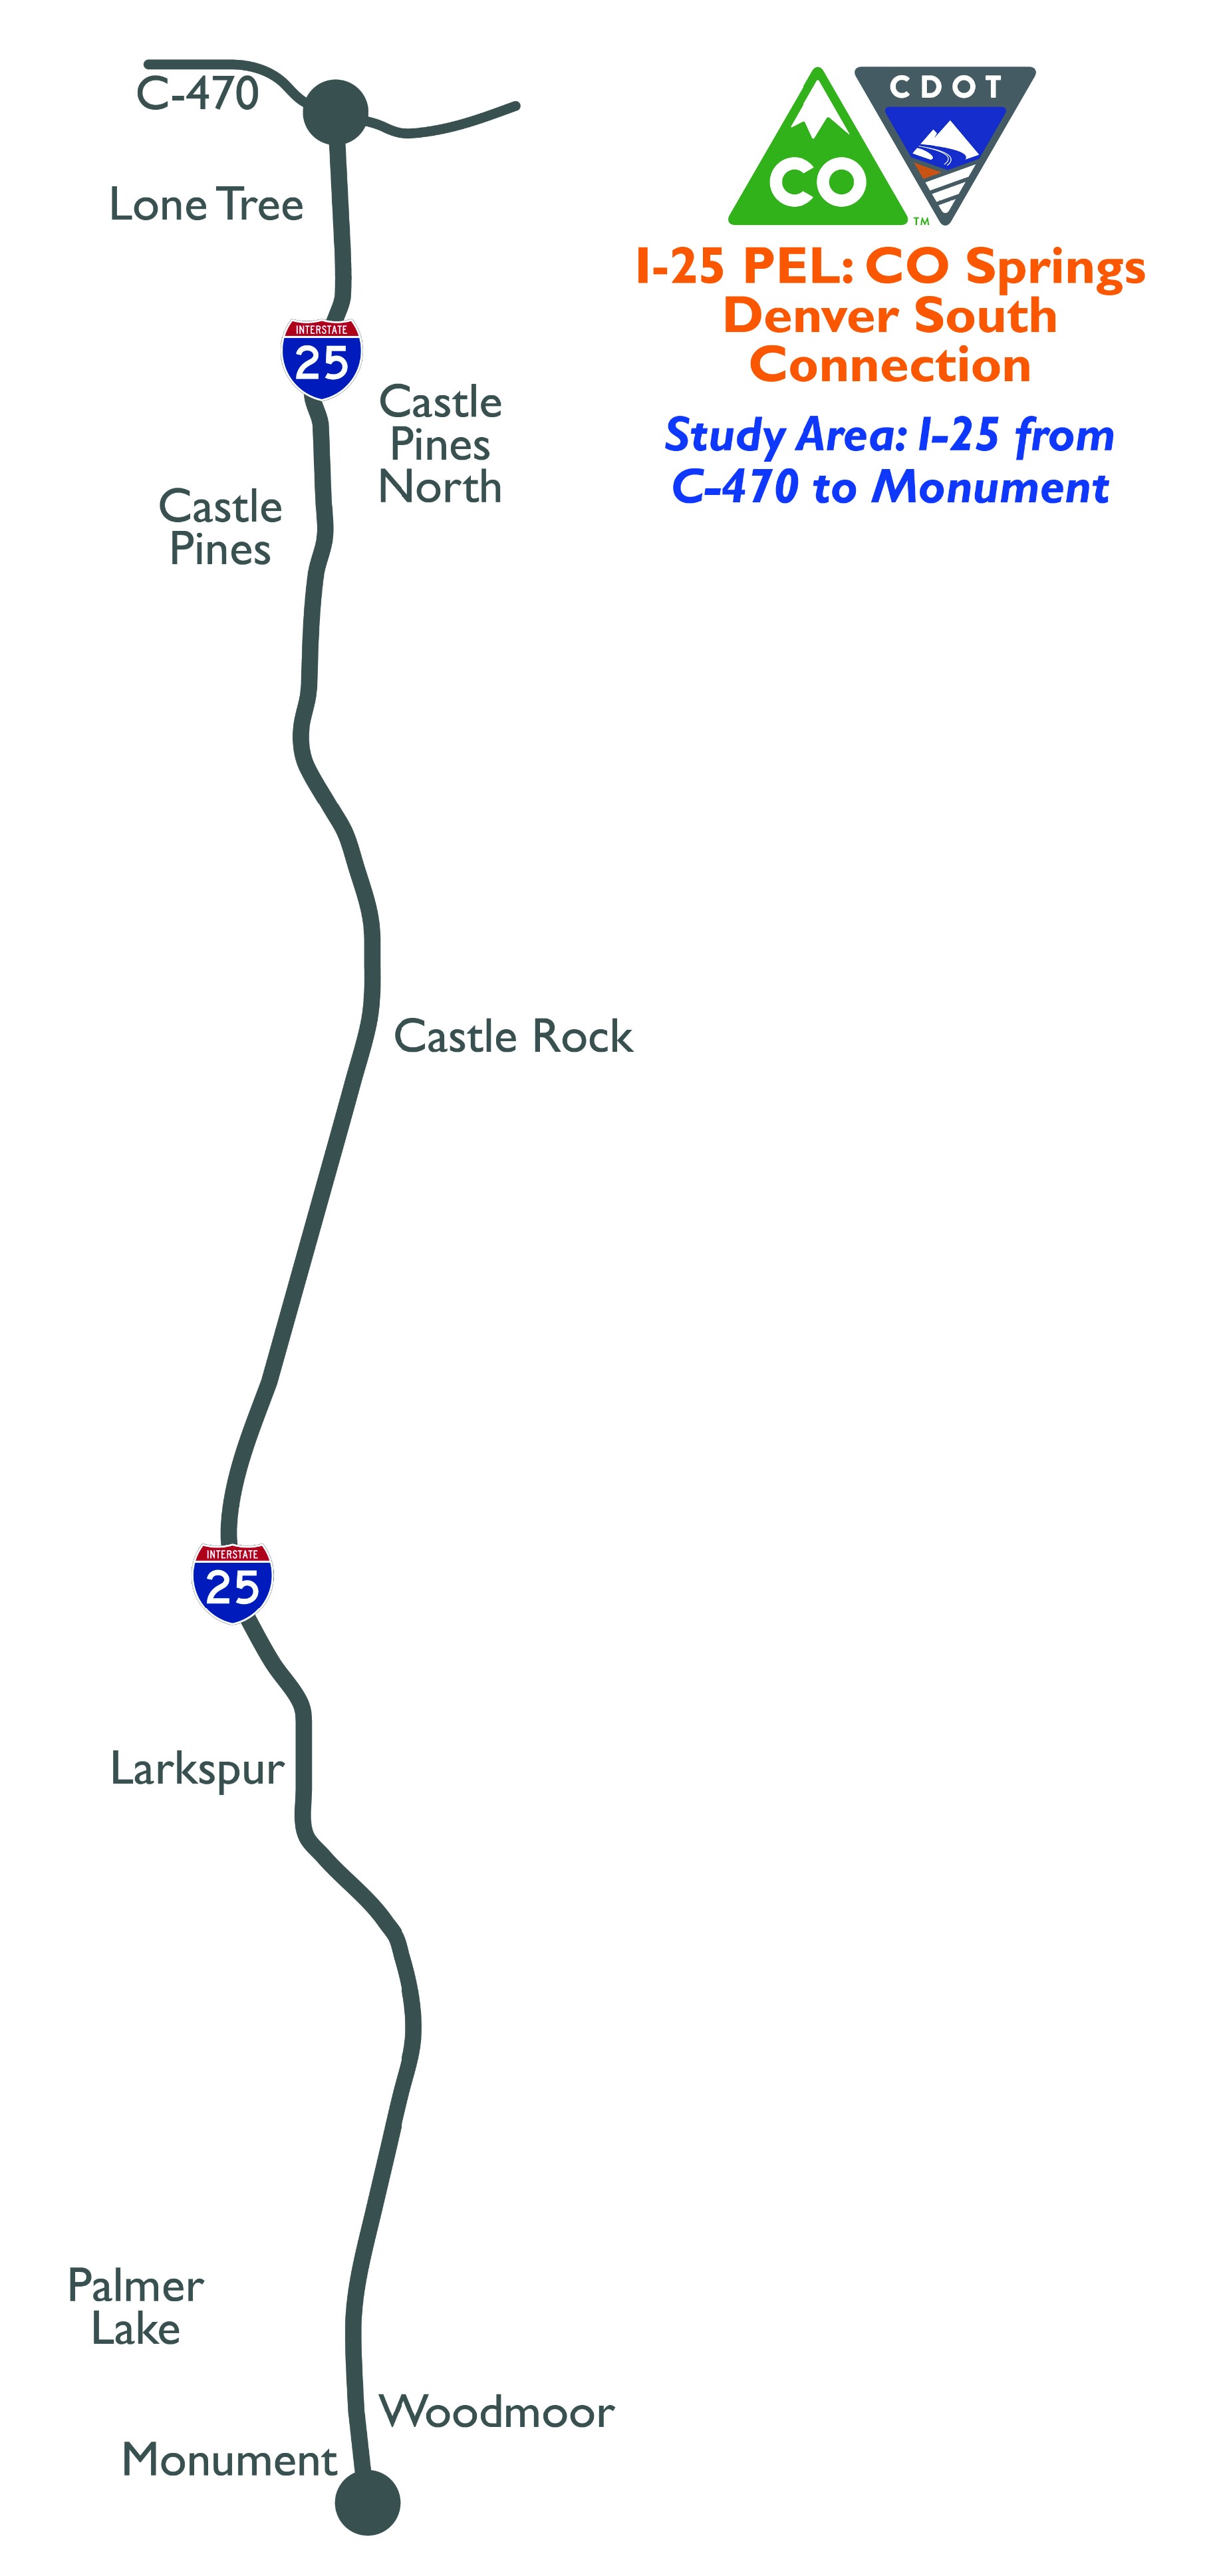 South I-25 PEL Study Area Map.jpg detail image